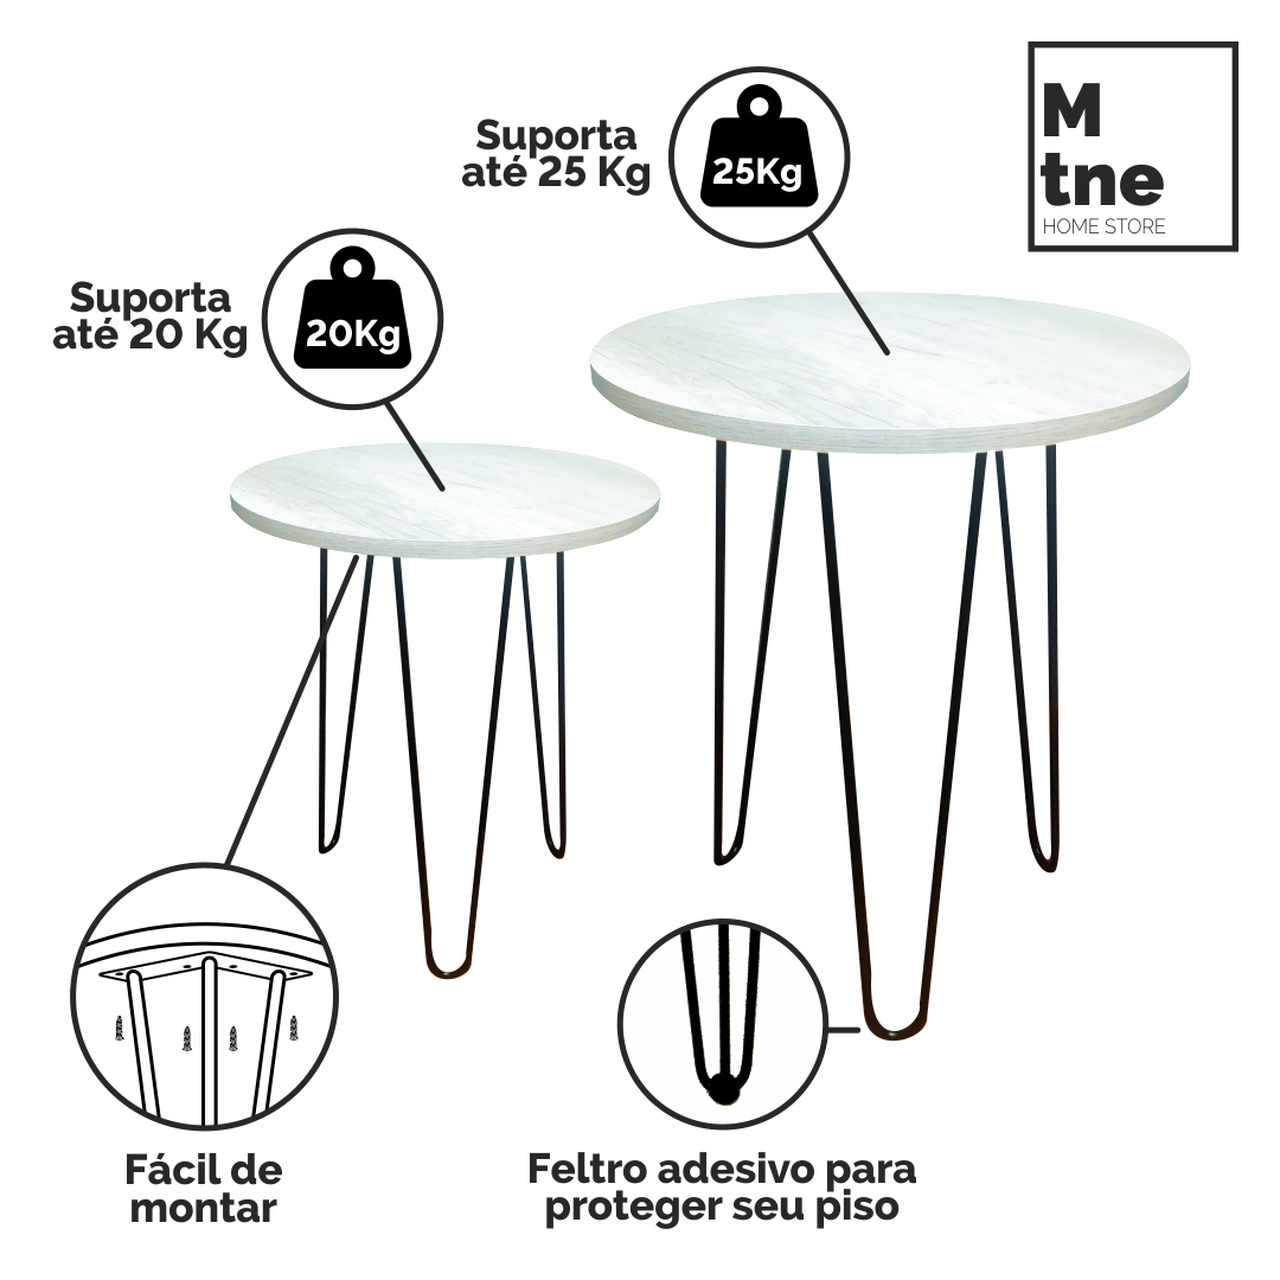 Conjunto de Mesinhas de Apoio Redondas com Hairpin Legs e Tampo 100% MDF Mezzo  - Mtne Store